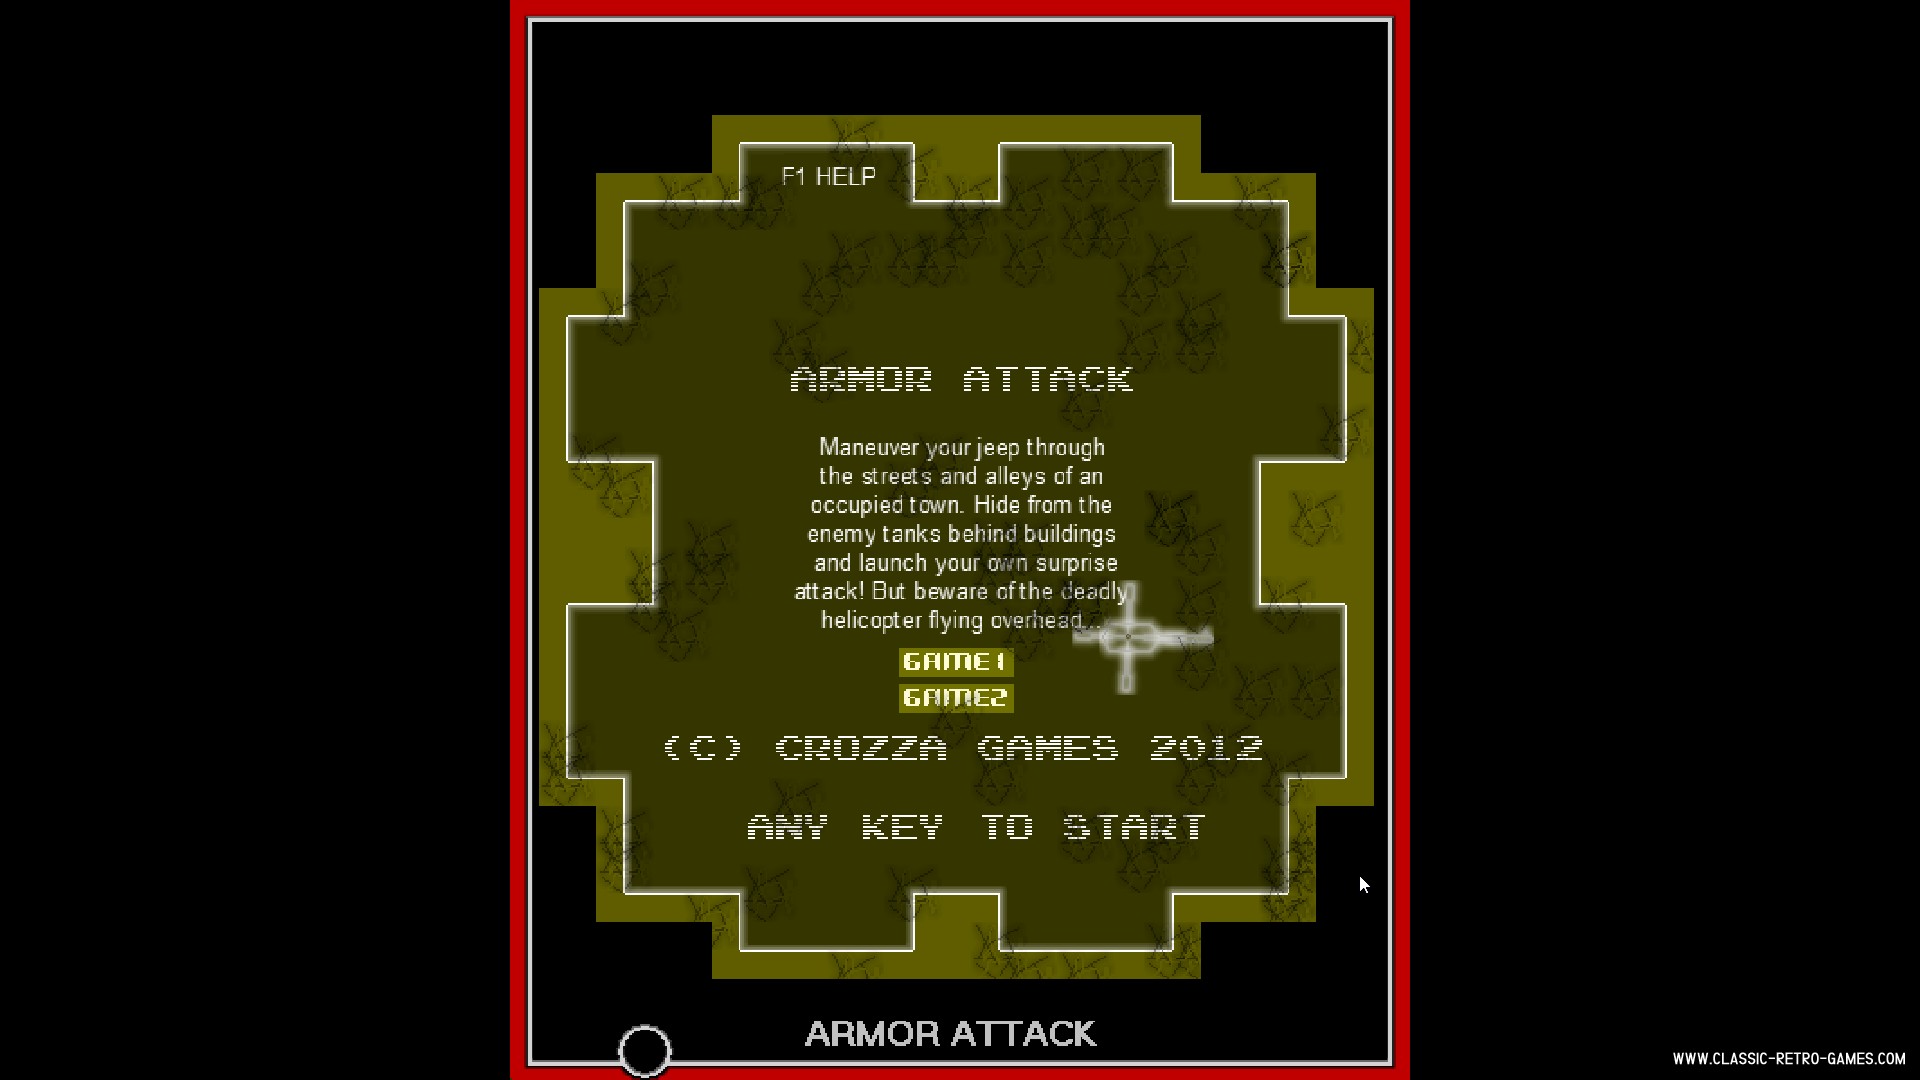 Armor Attack remake screenshot